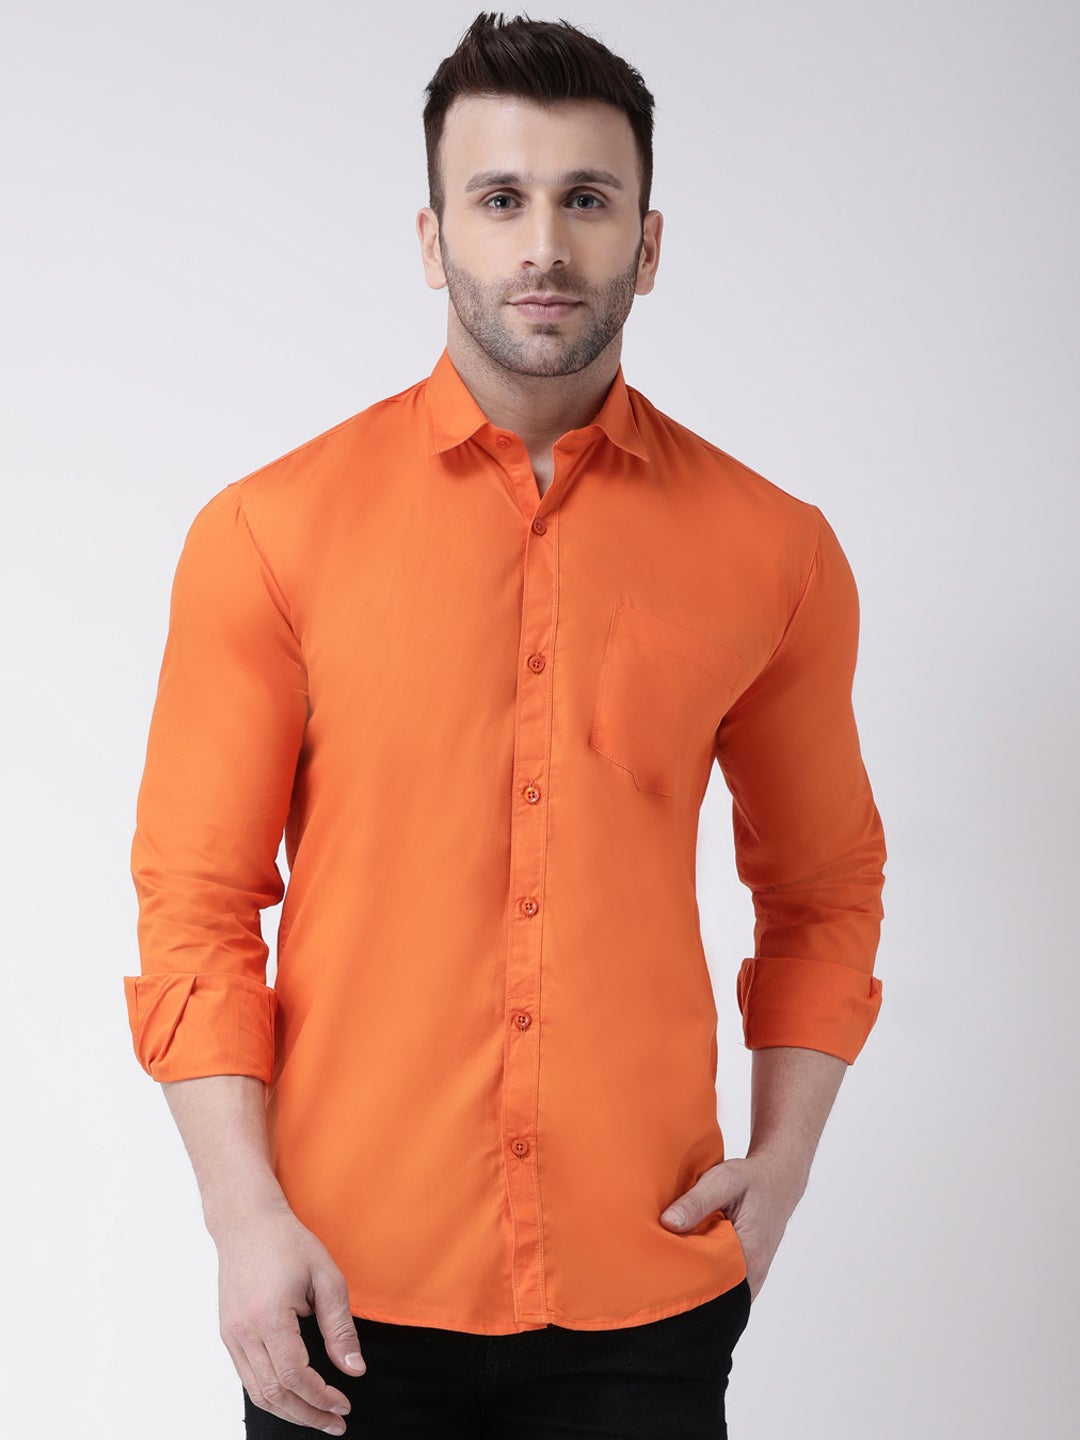 Men's Casual Orange Shirt